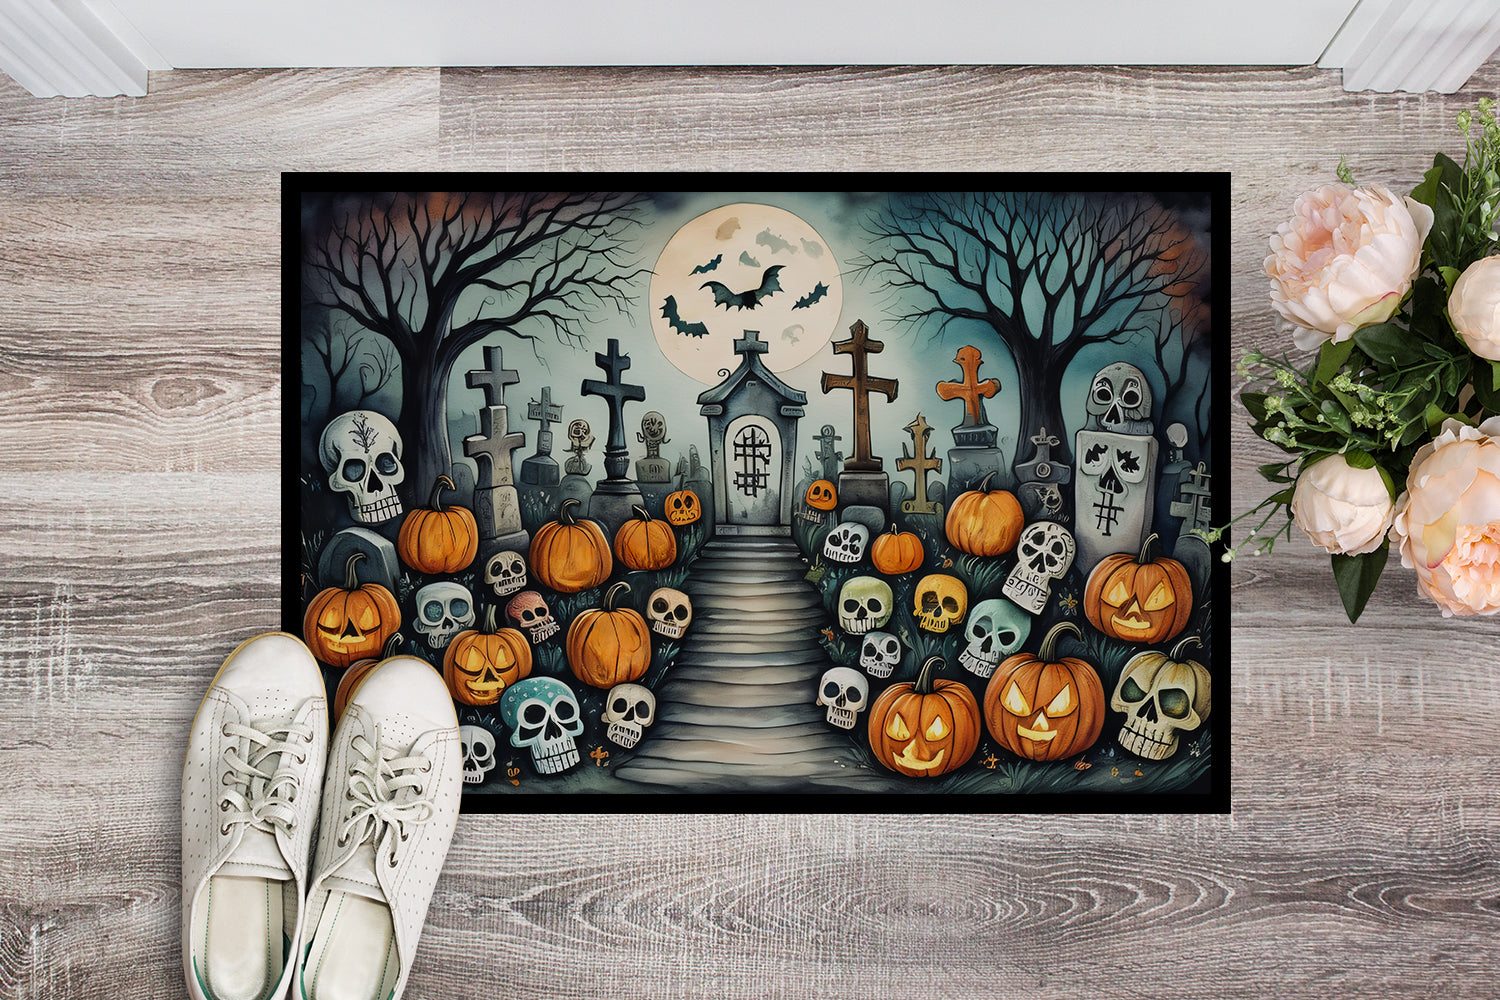 Buy this Calaveras Sugar Skulls Spooky Halloween Indoor or Outdoor Mat 24x36